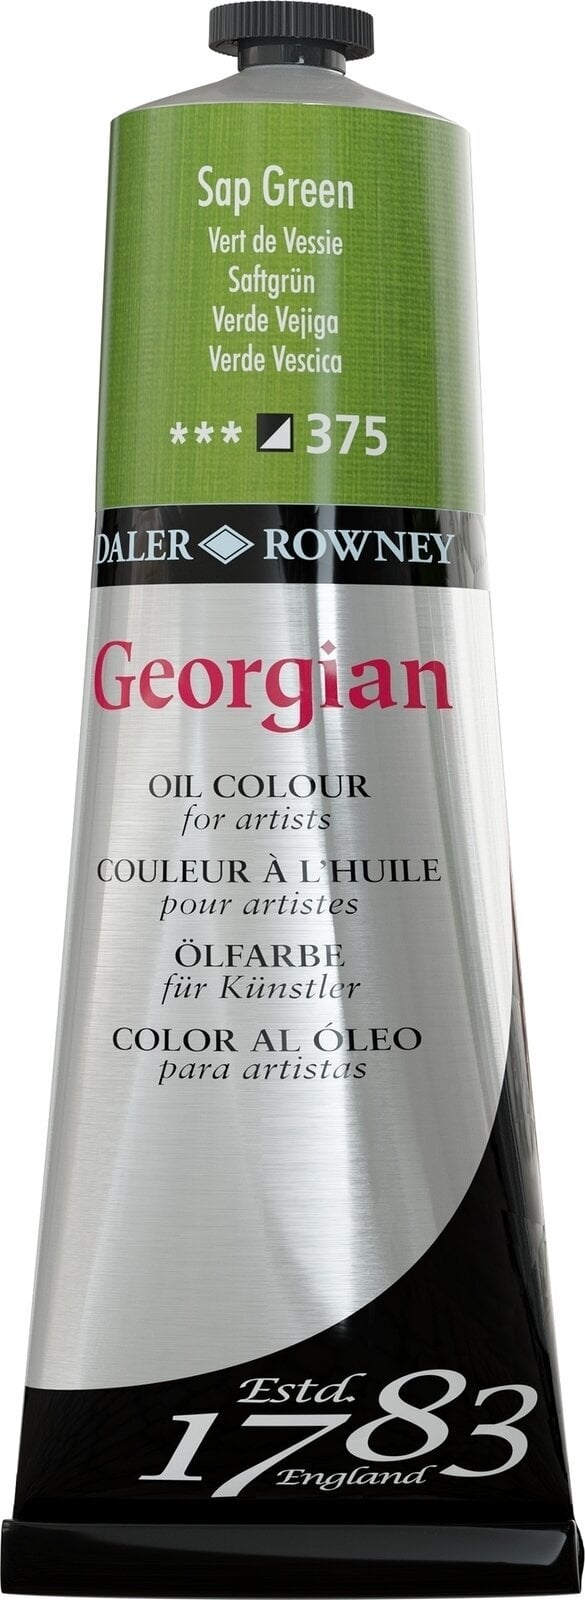 Oil colour Daler Rowney Georgian Oil Paint Sap Green 225 ml 1 pc